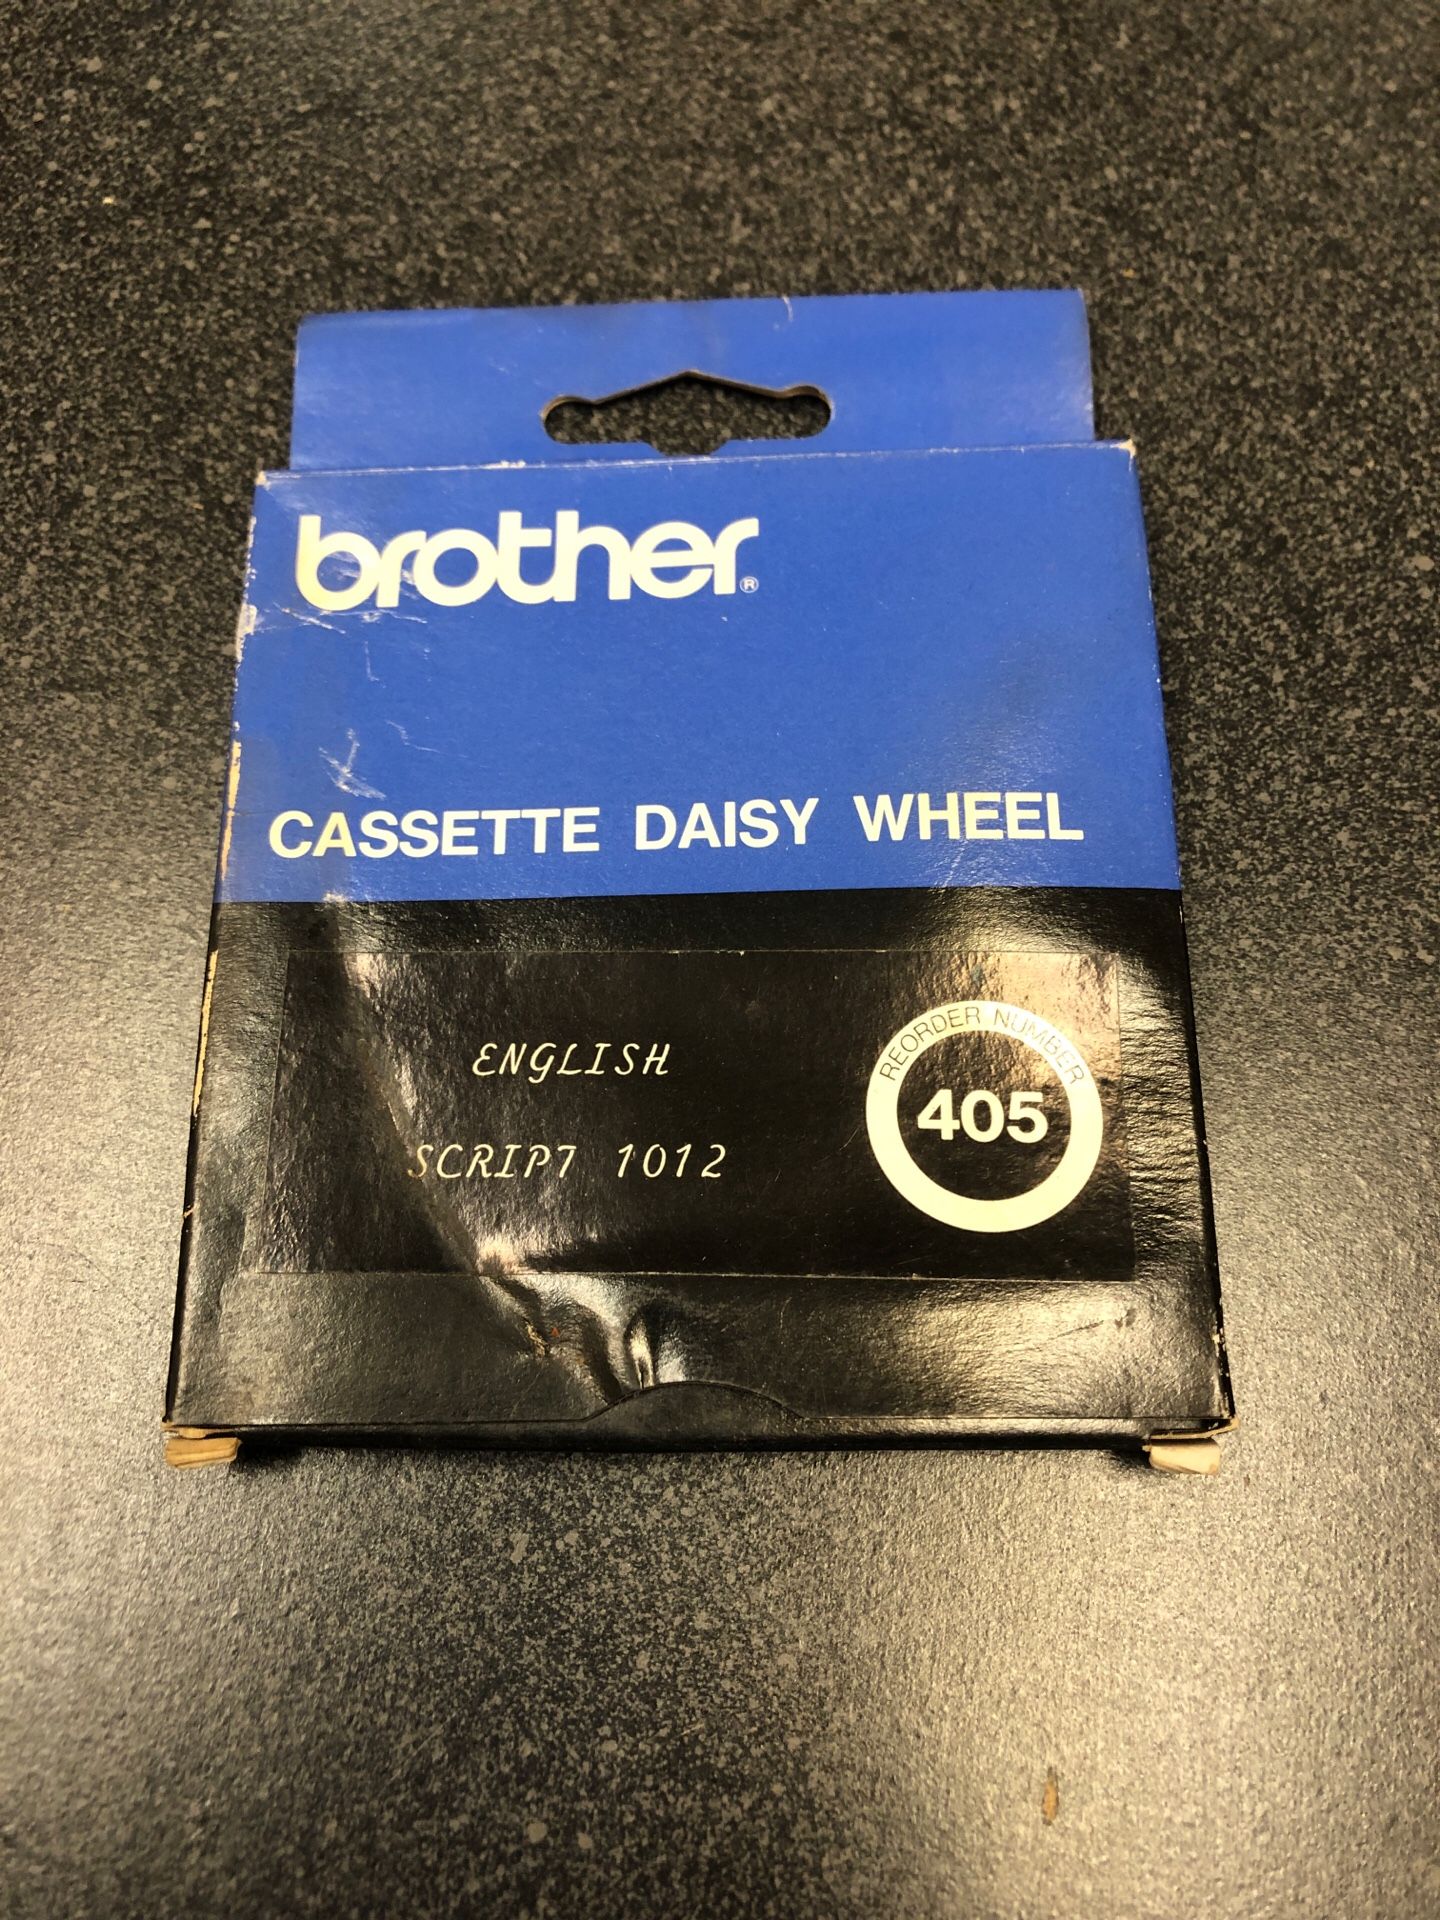 Brother cassette daisy wheel